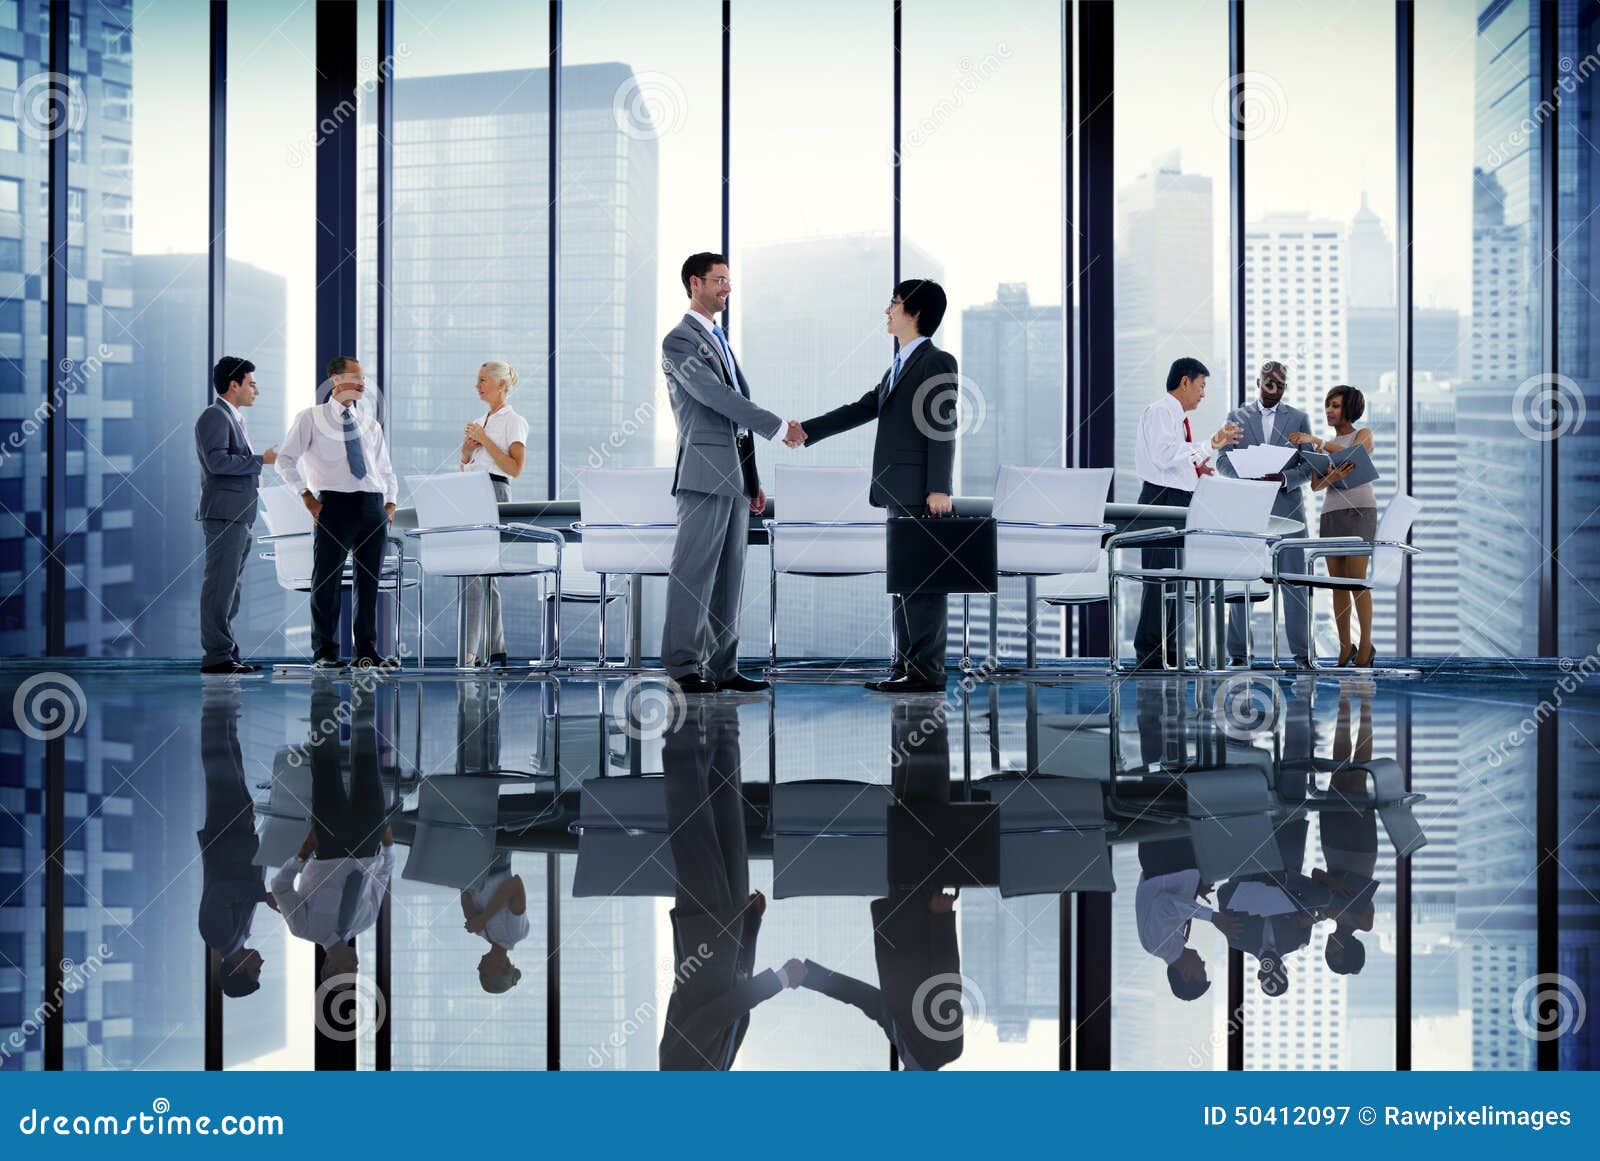 business people board room meeting handshake communication concept